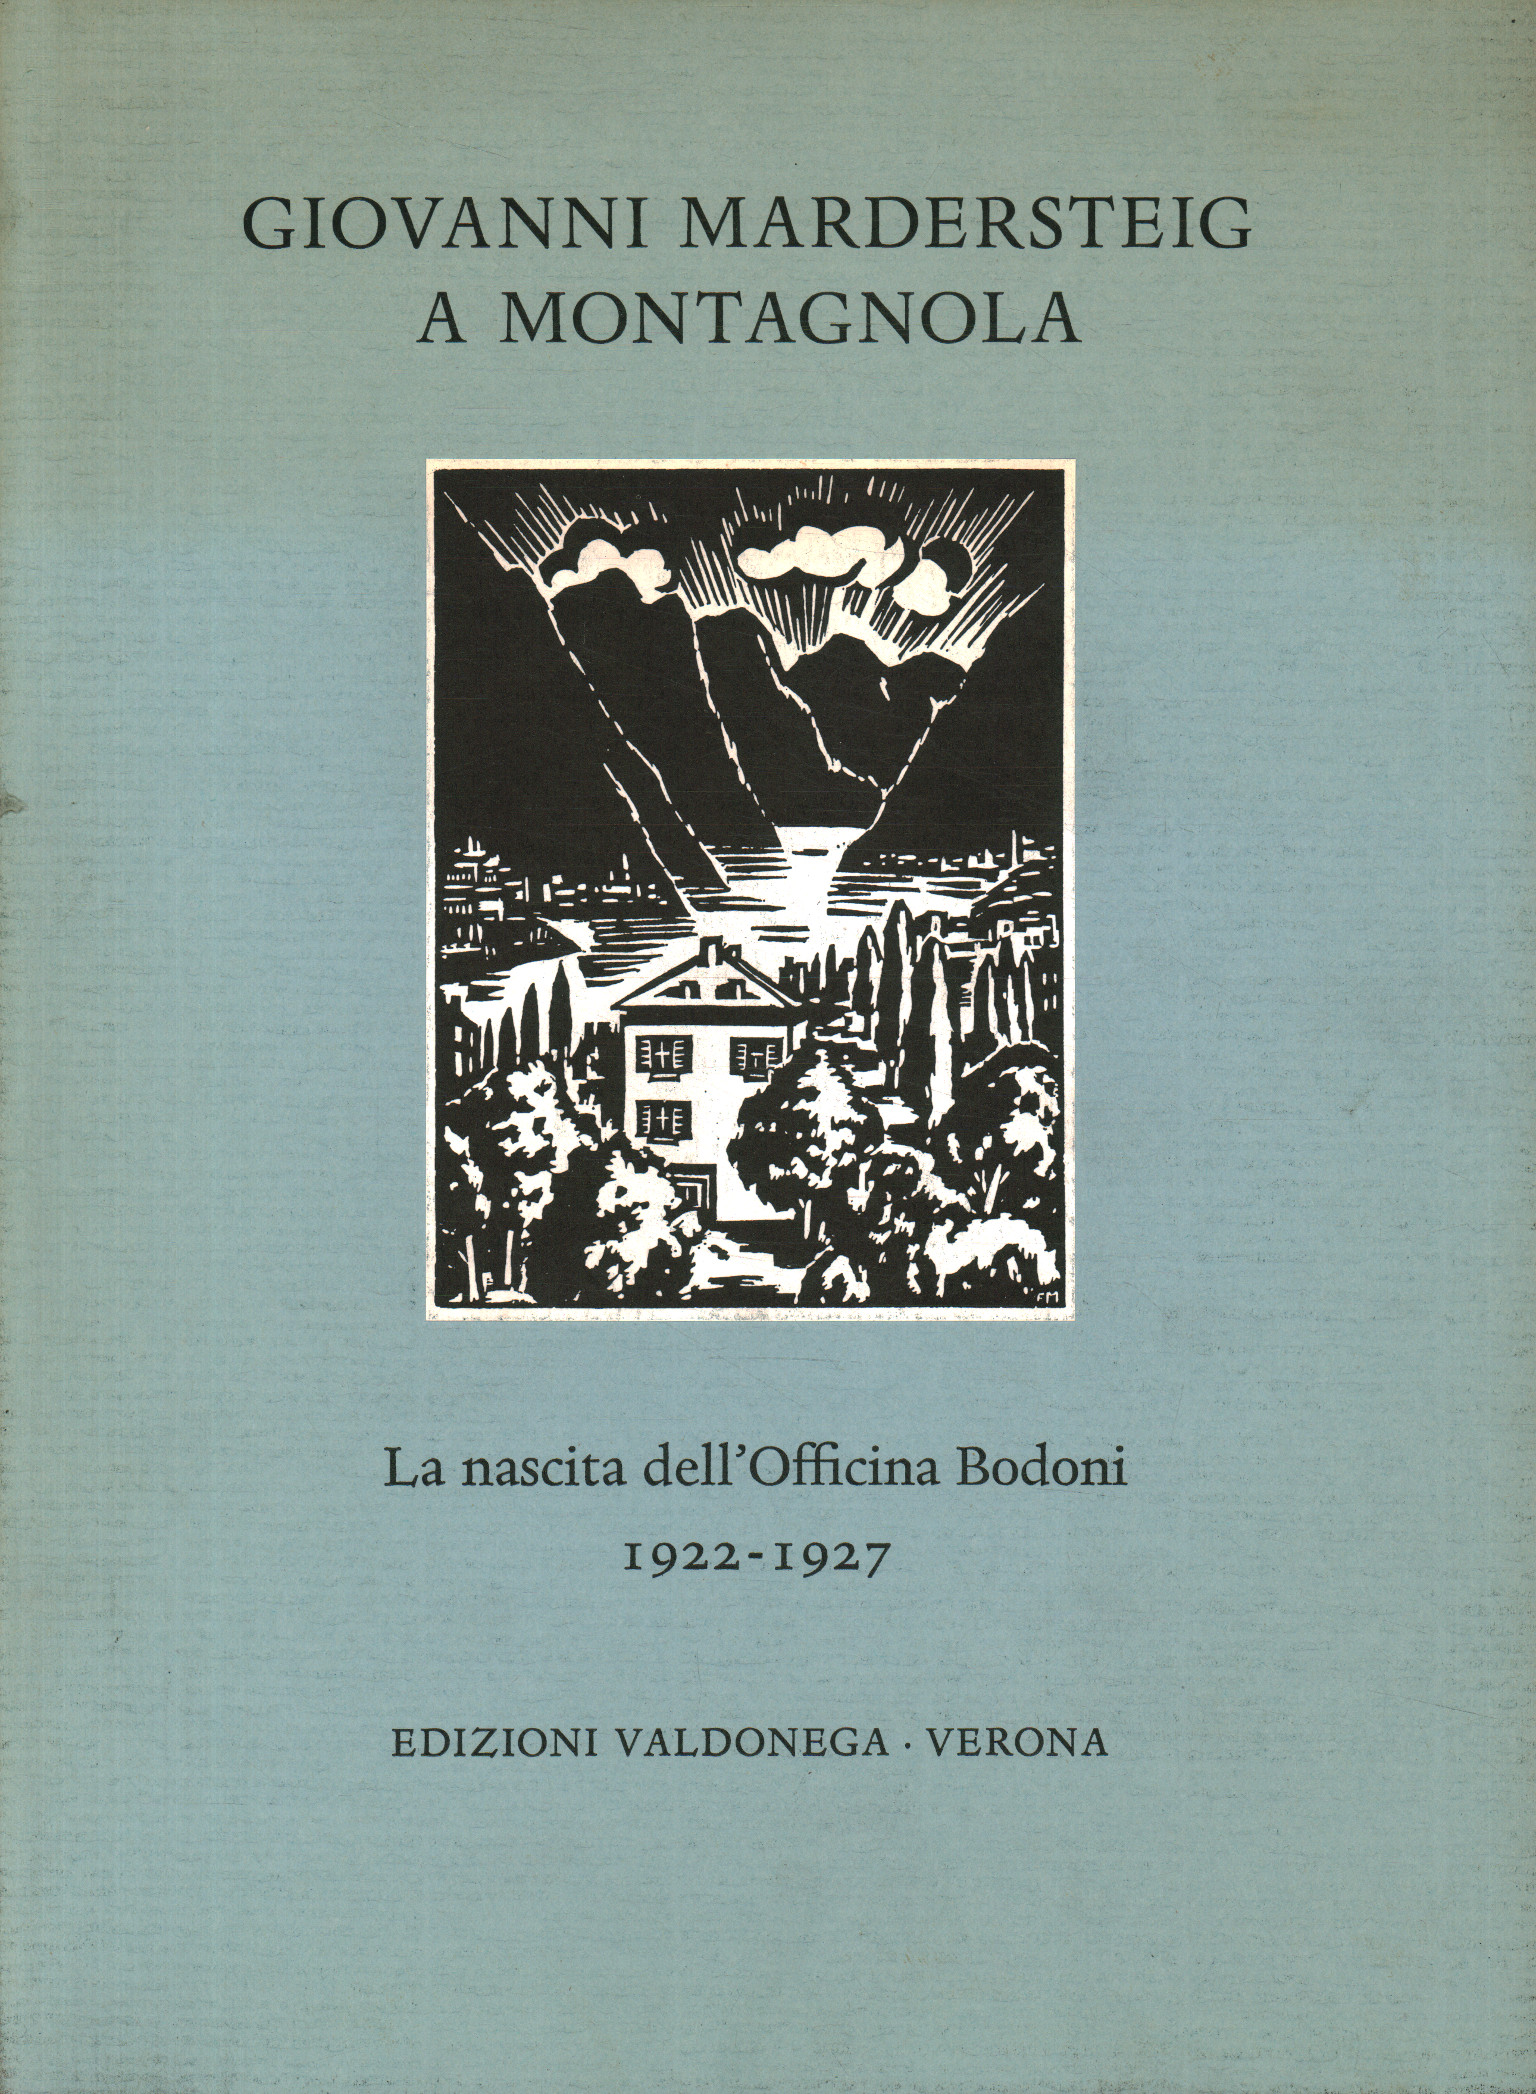 Giovanni Mardersteig en Montagnola